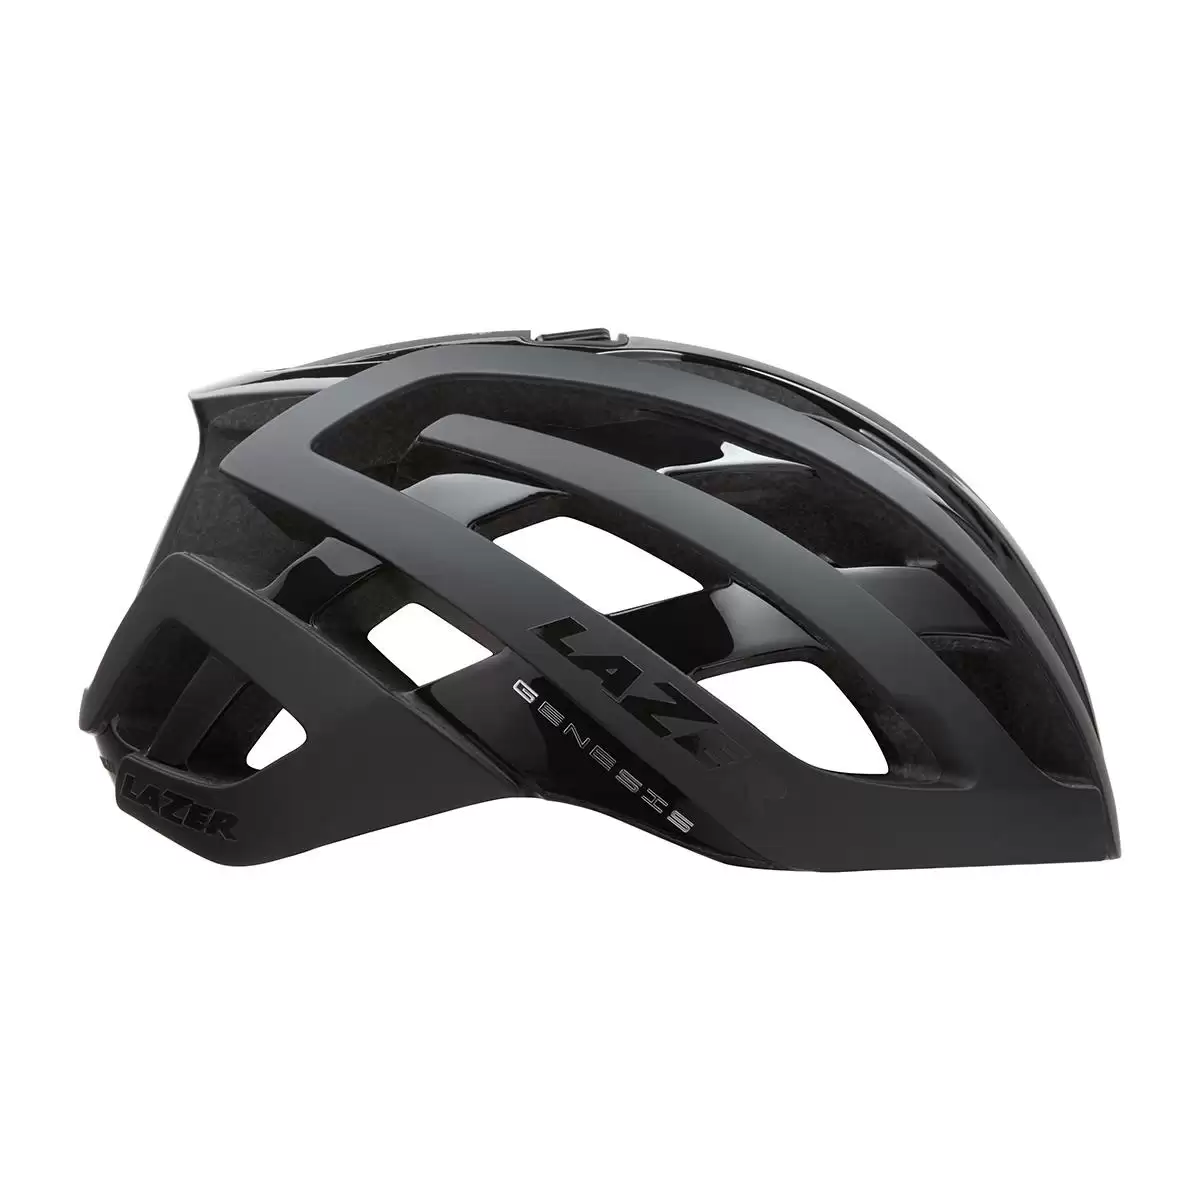 Ultralight helmet Genesis black MIPS size S (52-56) - image